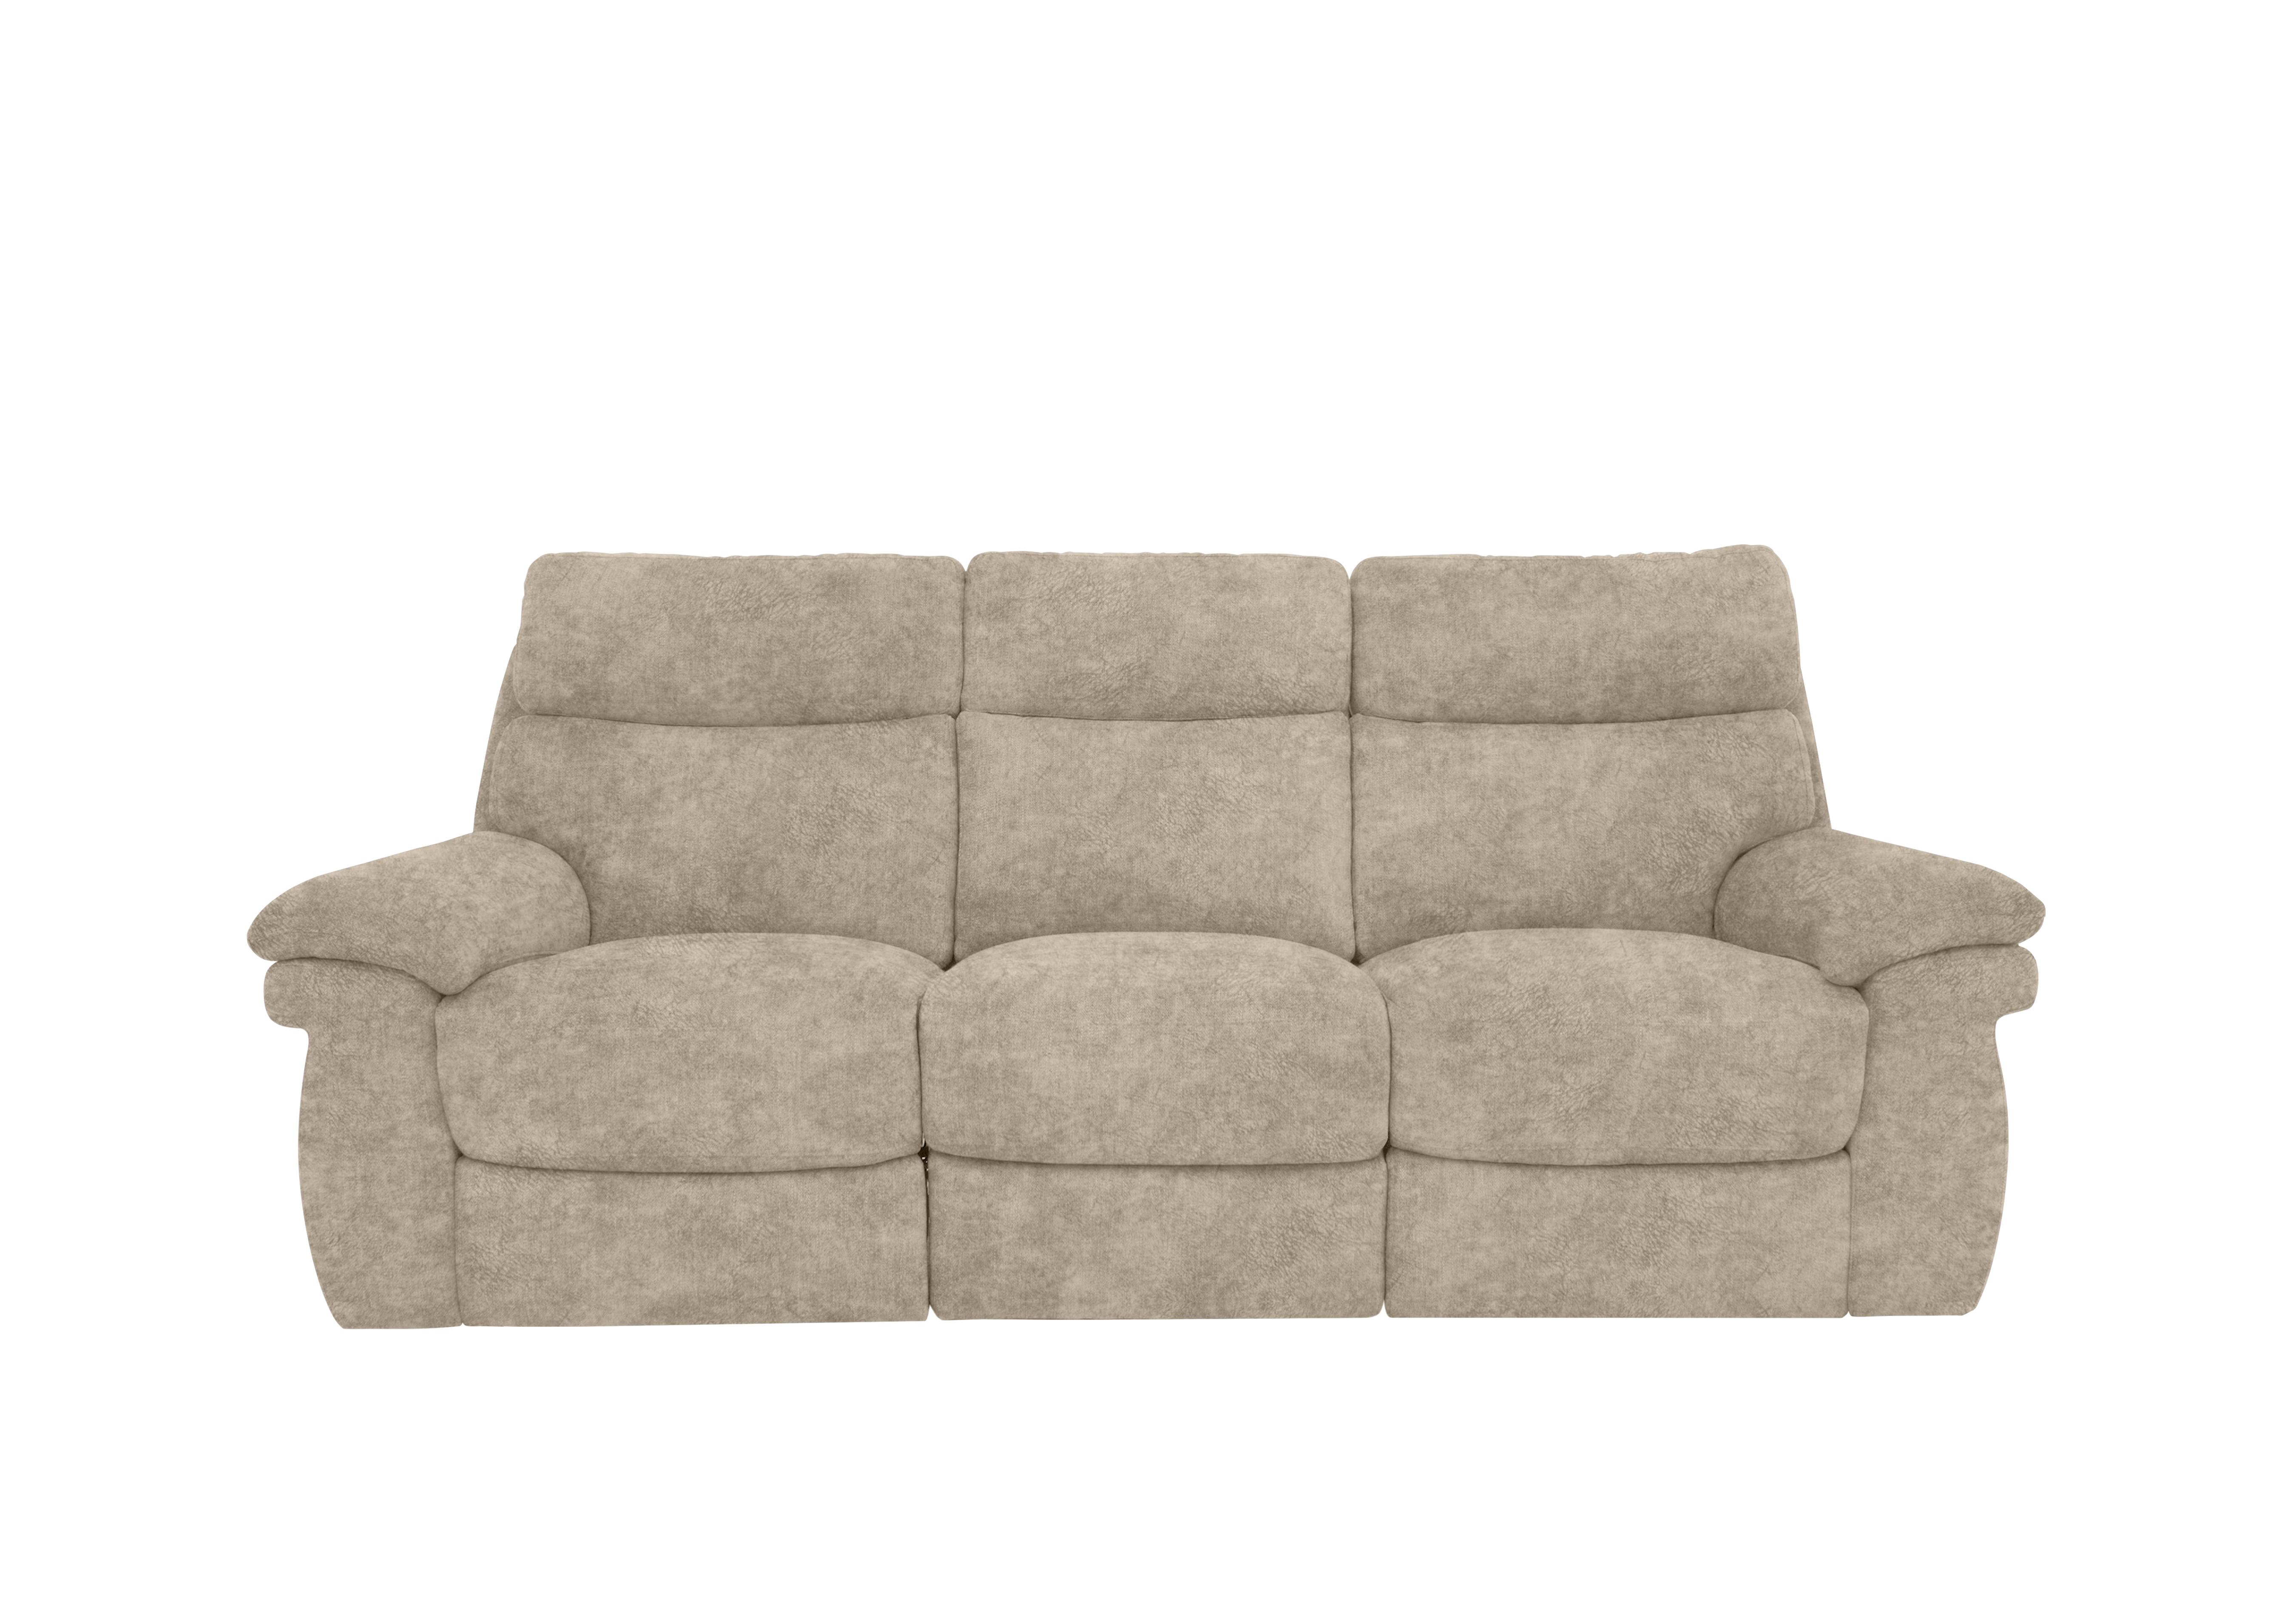 Serene 3 Seater Fabric Sofa in Bfa-Bnn-R26 Cream on Furniture Village